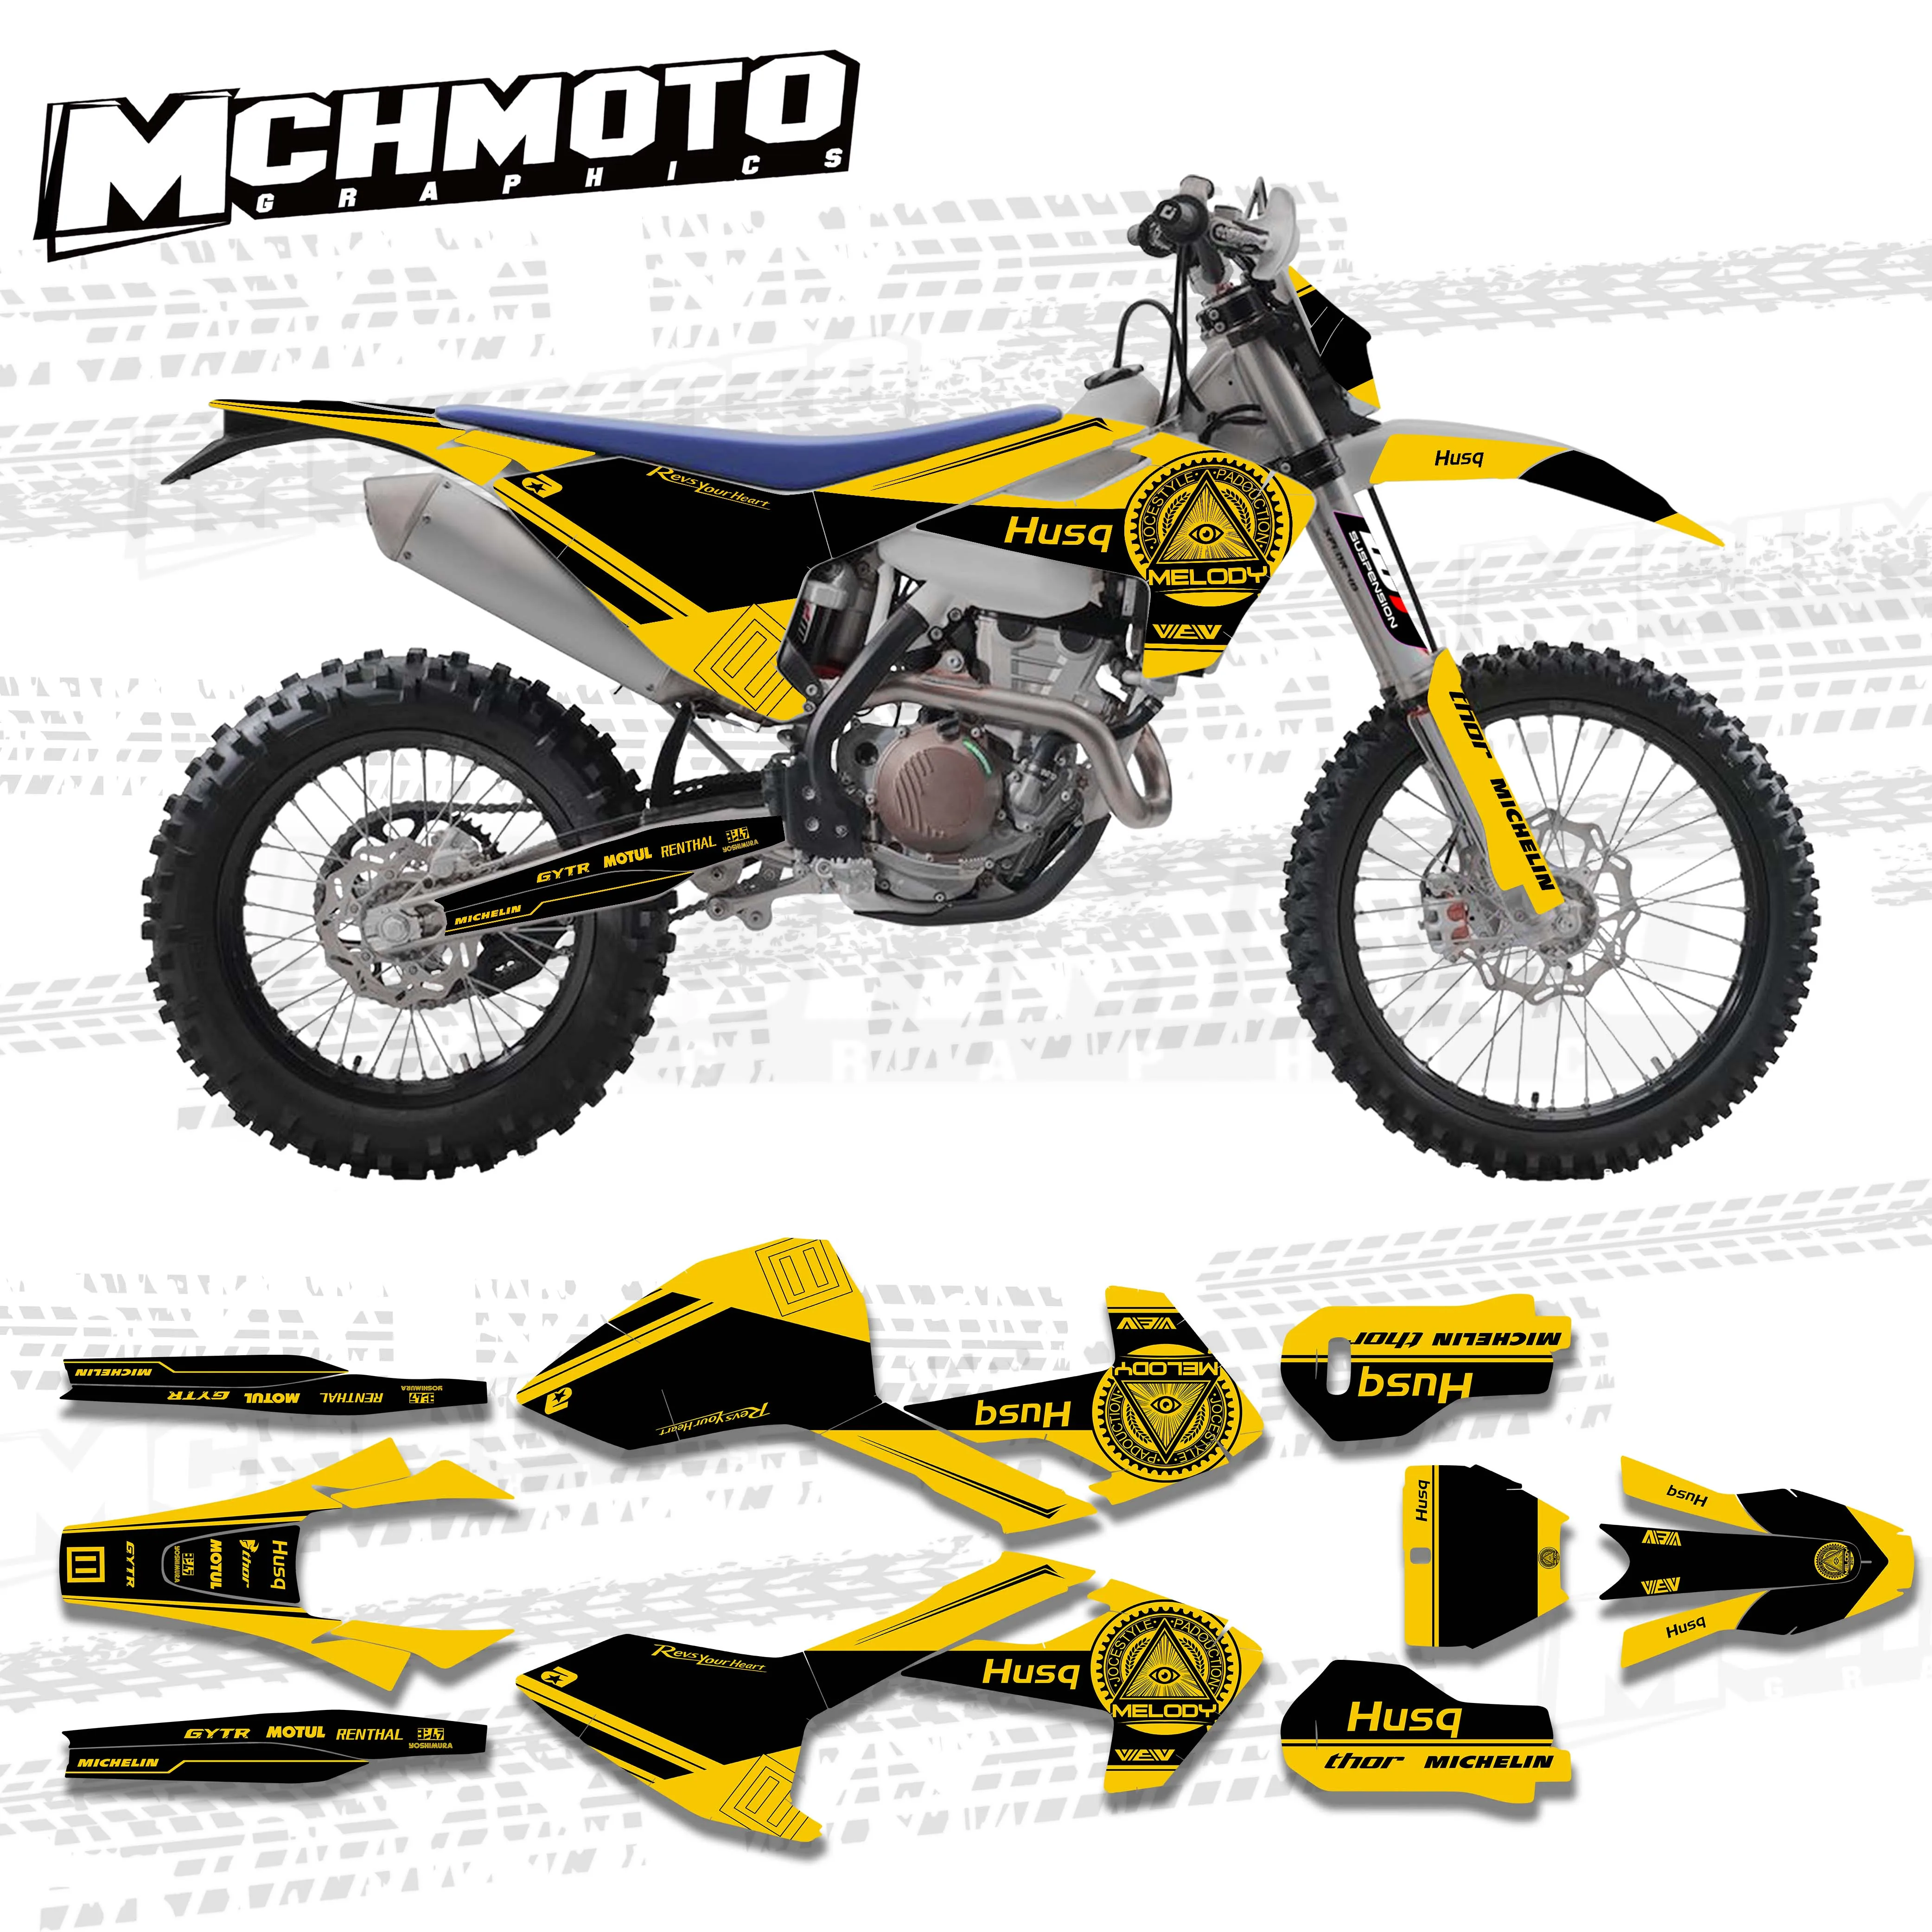 MCHMFG-Kit de calcomanías y pegatinas gráficas para Equipo de Motocicleta, decoración para Husqvarna TE FE TX 2017 - 2019 TC FC TX 2016 2018 125 150 200 35